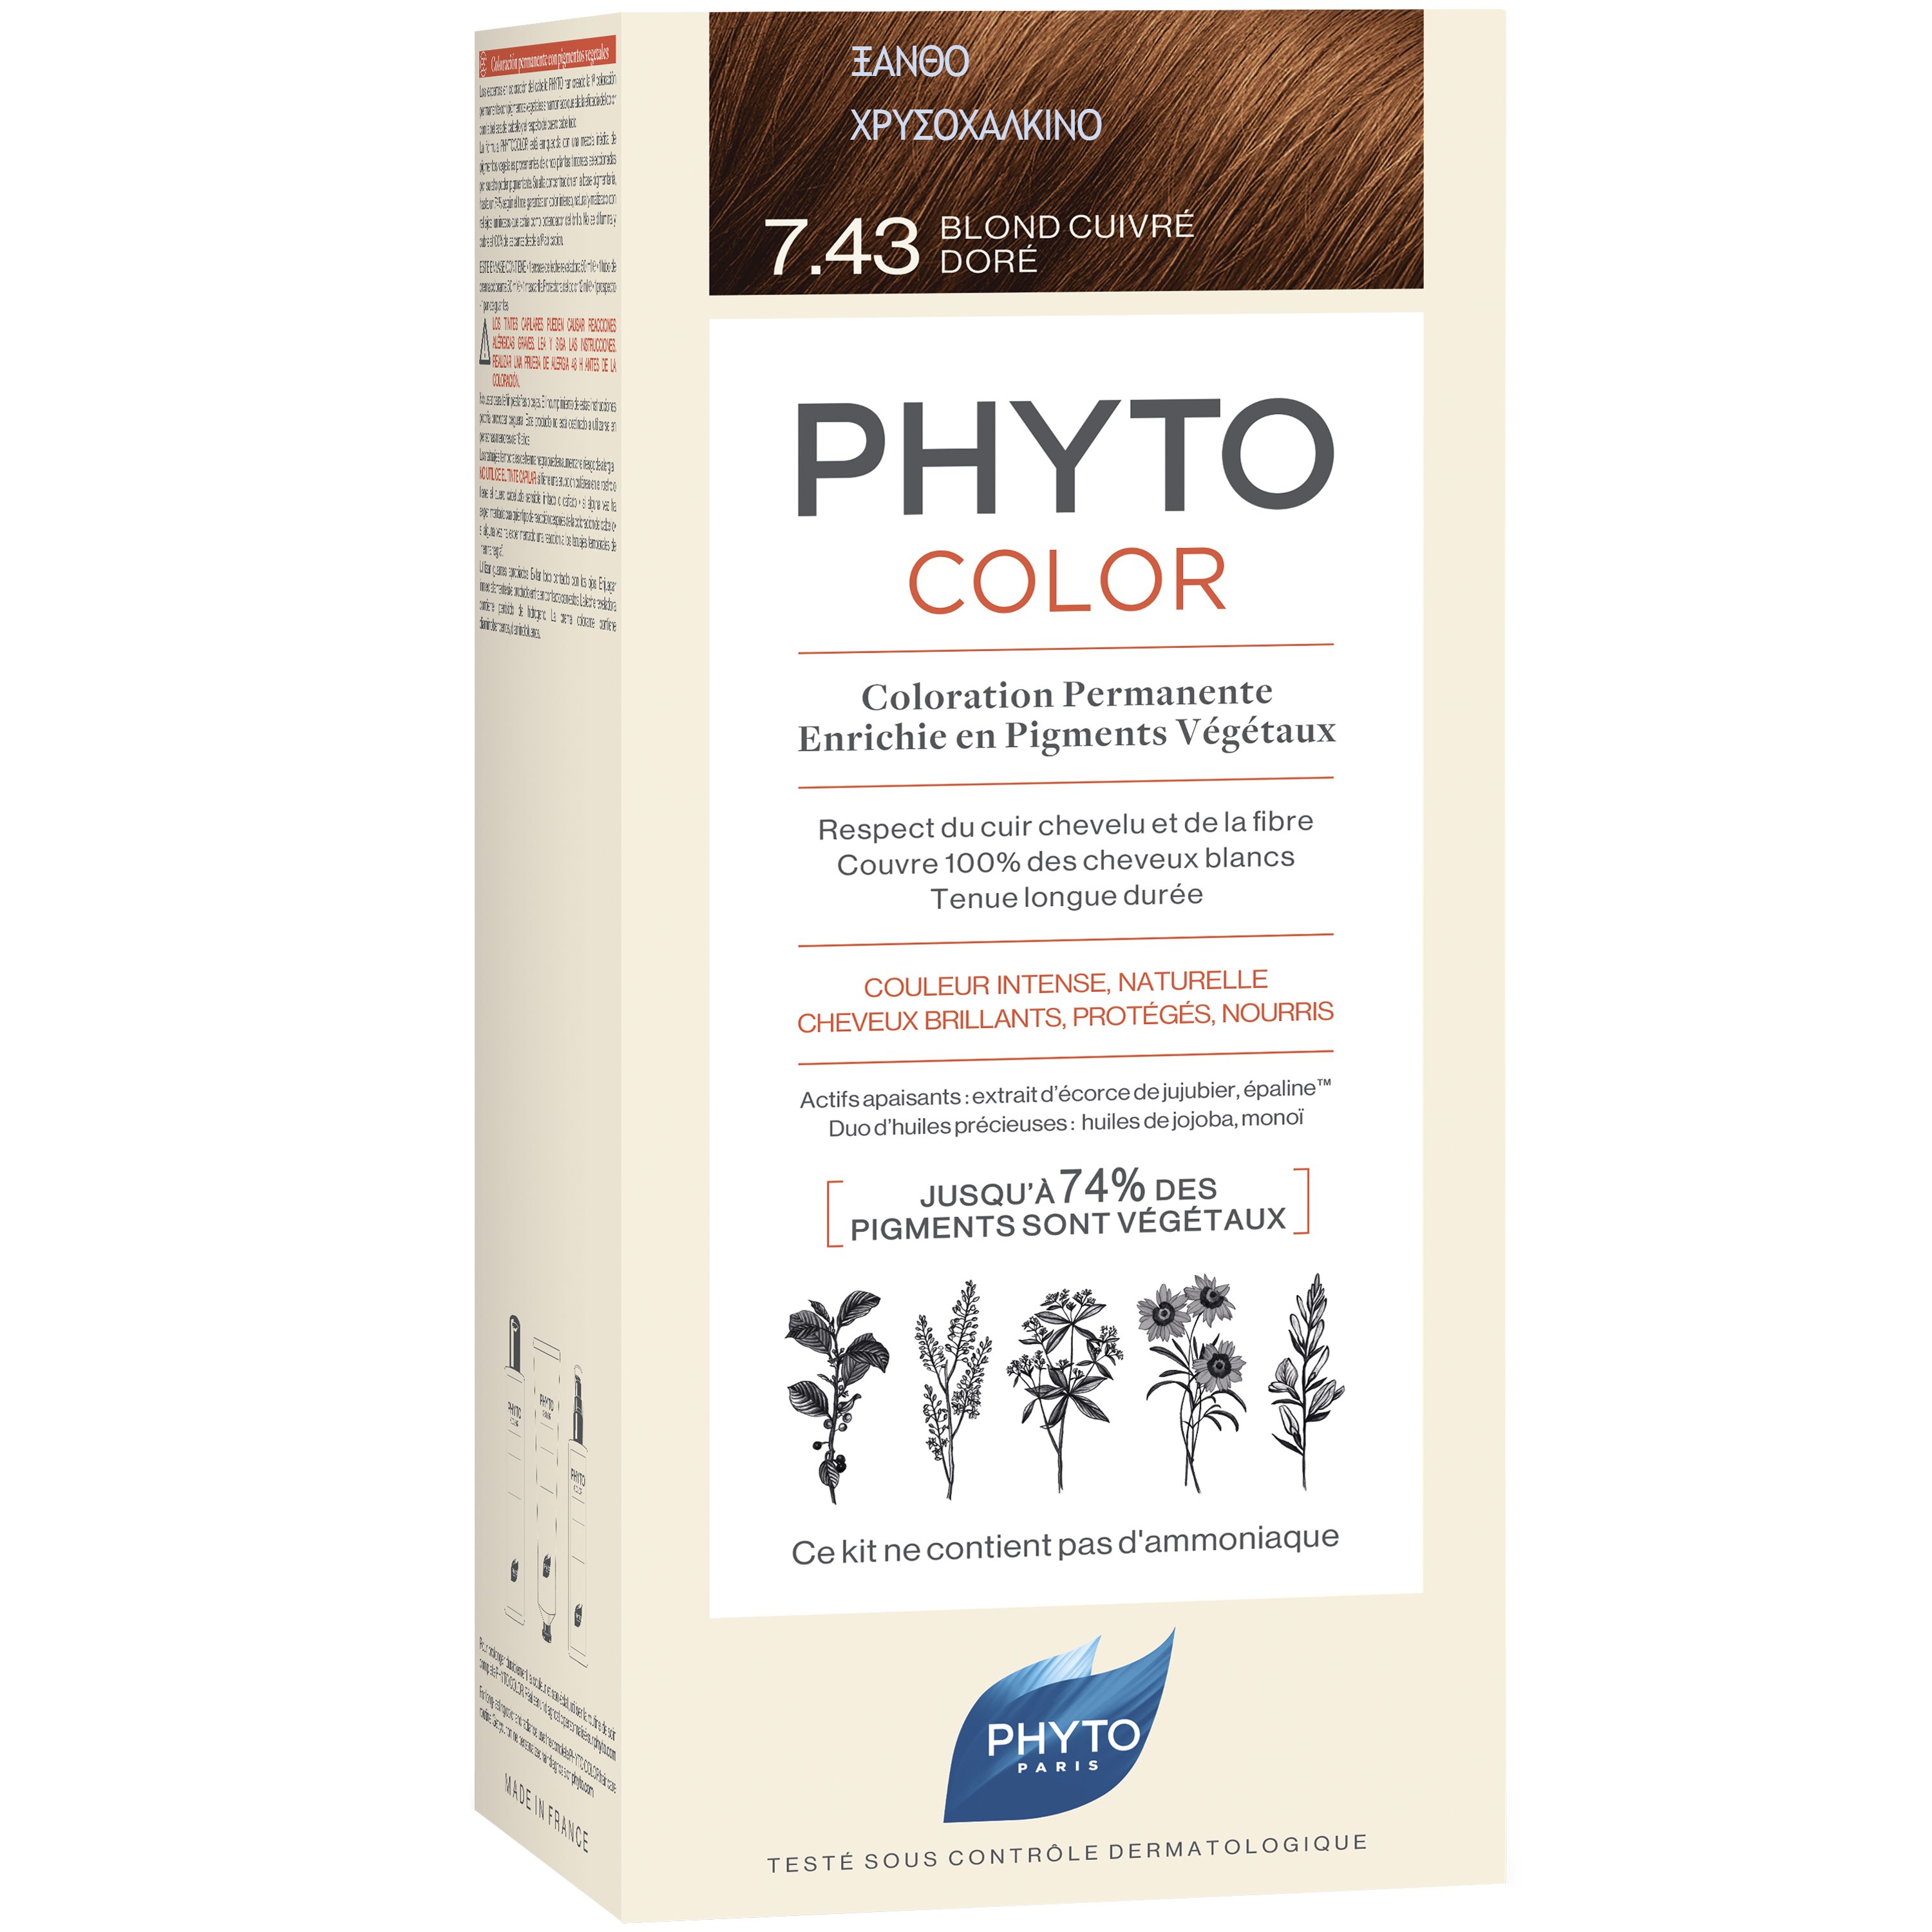 Phyto PhytoColor Coloration Permanente η No1 Μόνιμη Βαφή Μαλλιών Χωρίς Χρωστικές Ουσίες & Αμμωνία – 7.43 Ξανθό Χρυσοχάλκινο